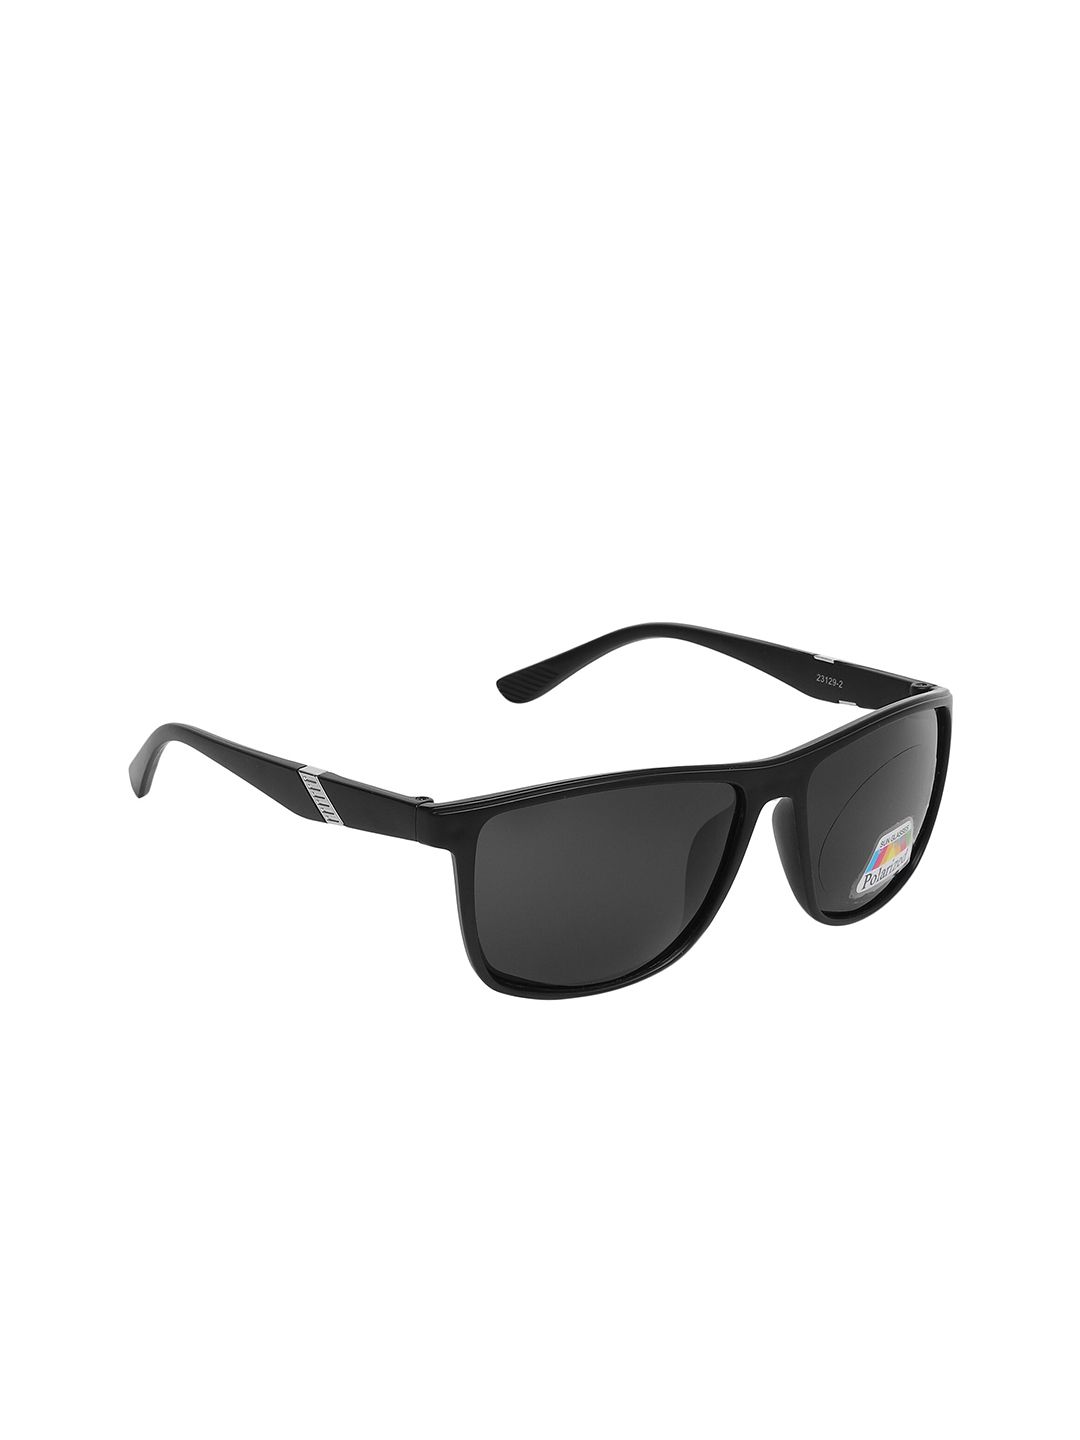 CRIBA Unisex Black UV Protected Wayfarer Sunglasses CR_SIL-ARM Price in India